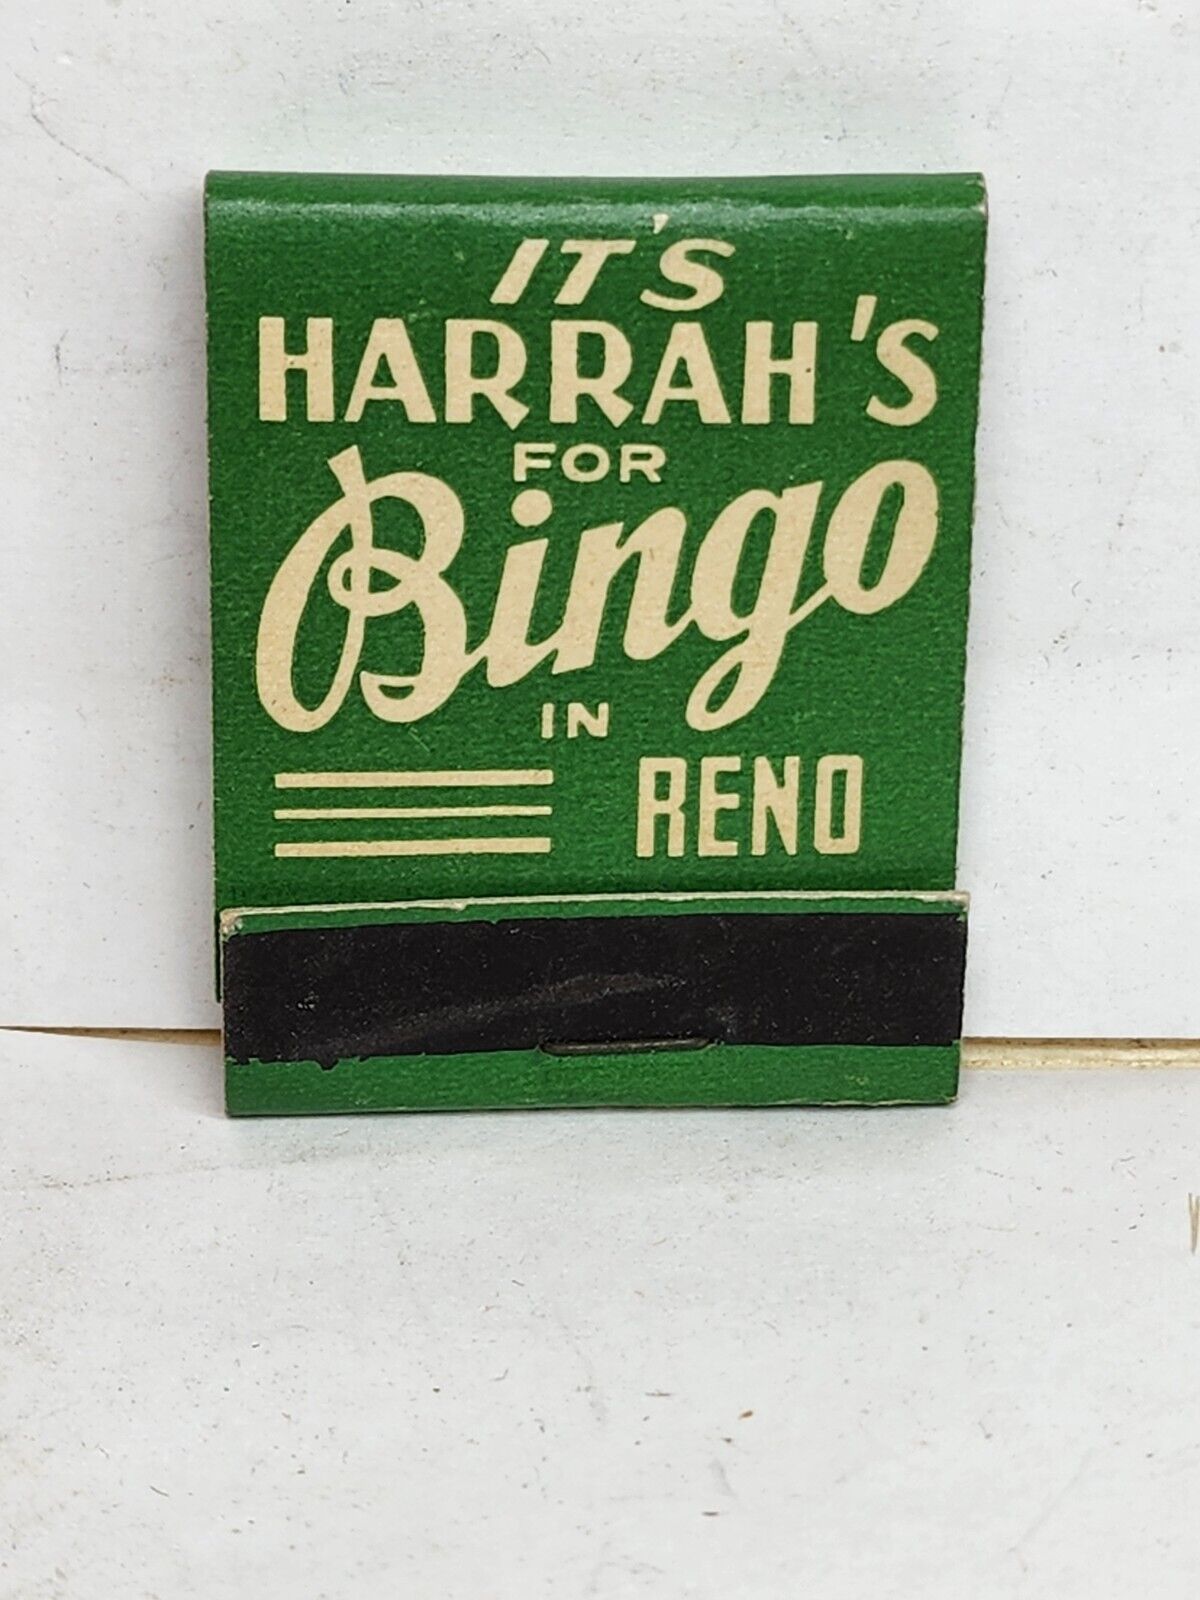 Vintage HARRAH'S CASINO BINGO Matchbook Cover - Reno Nevada Casino Gambling